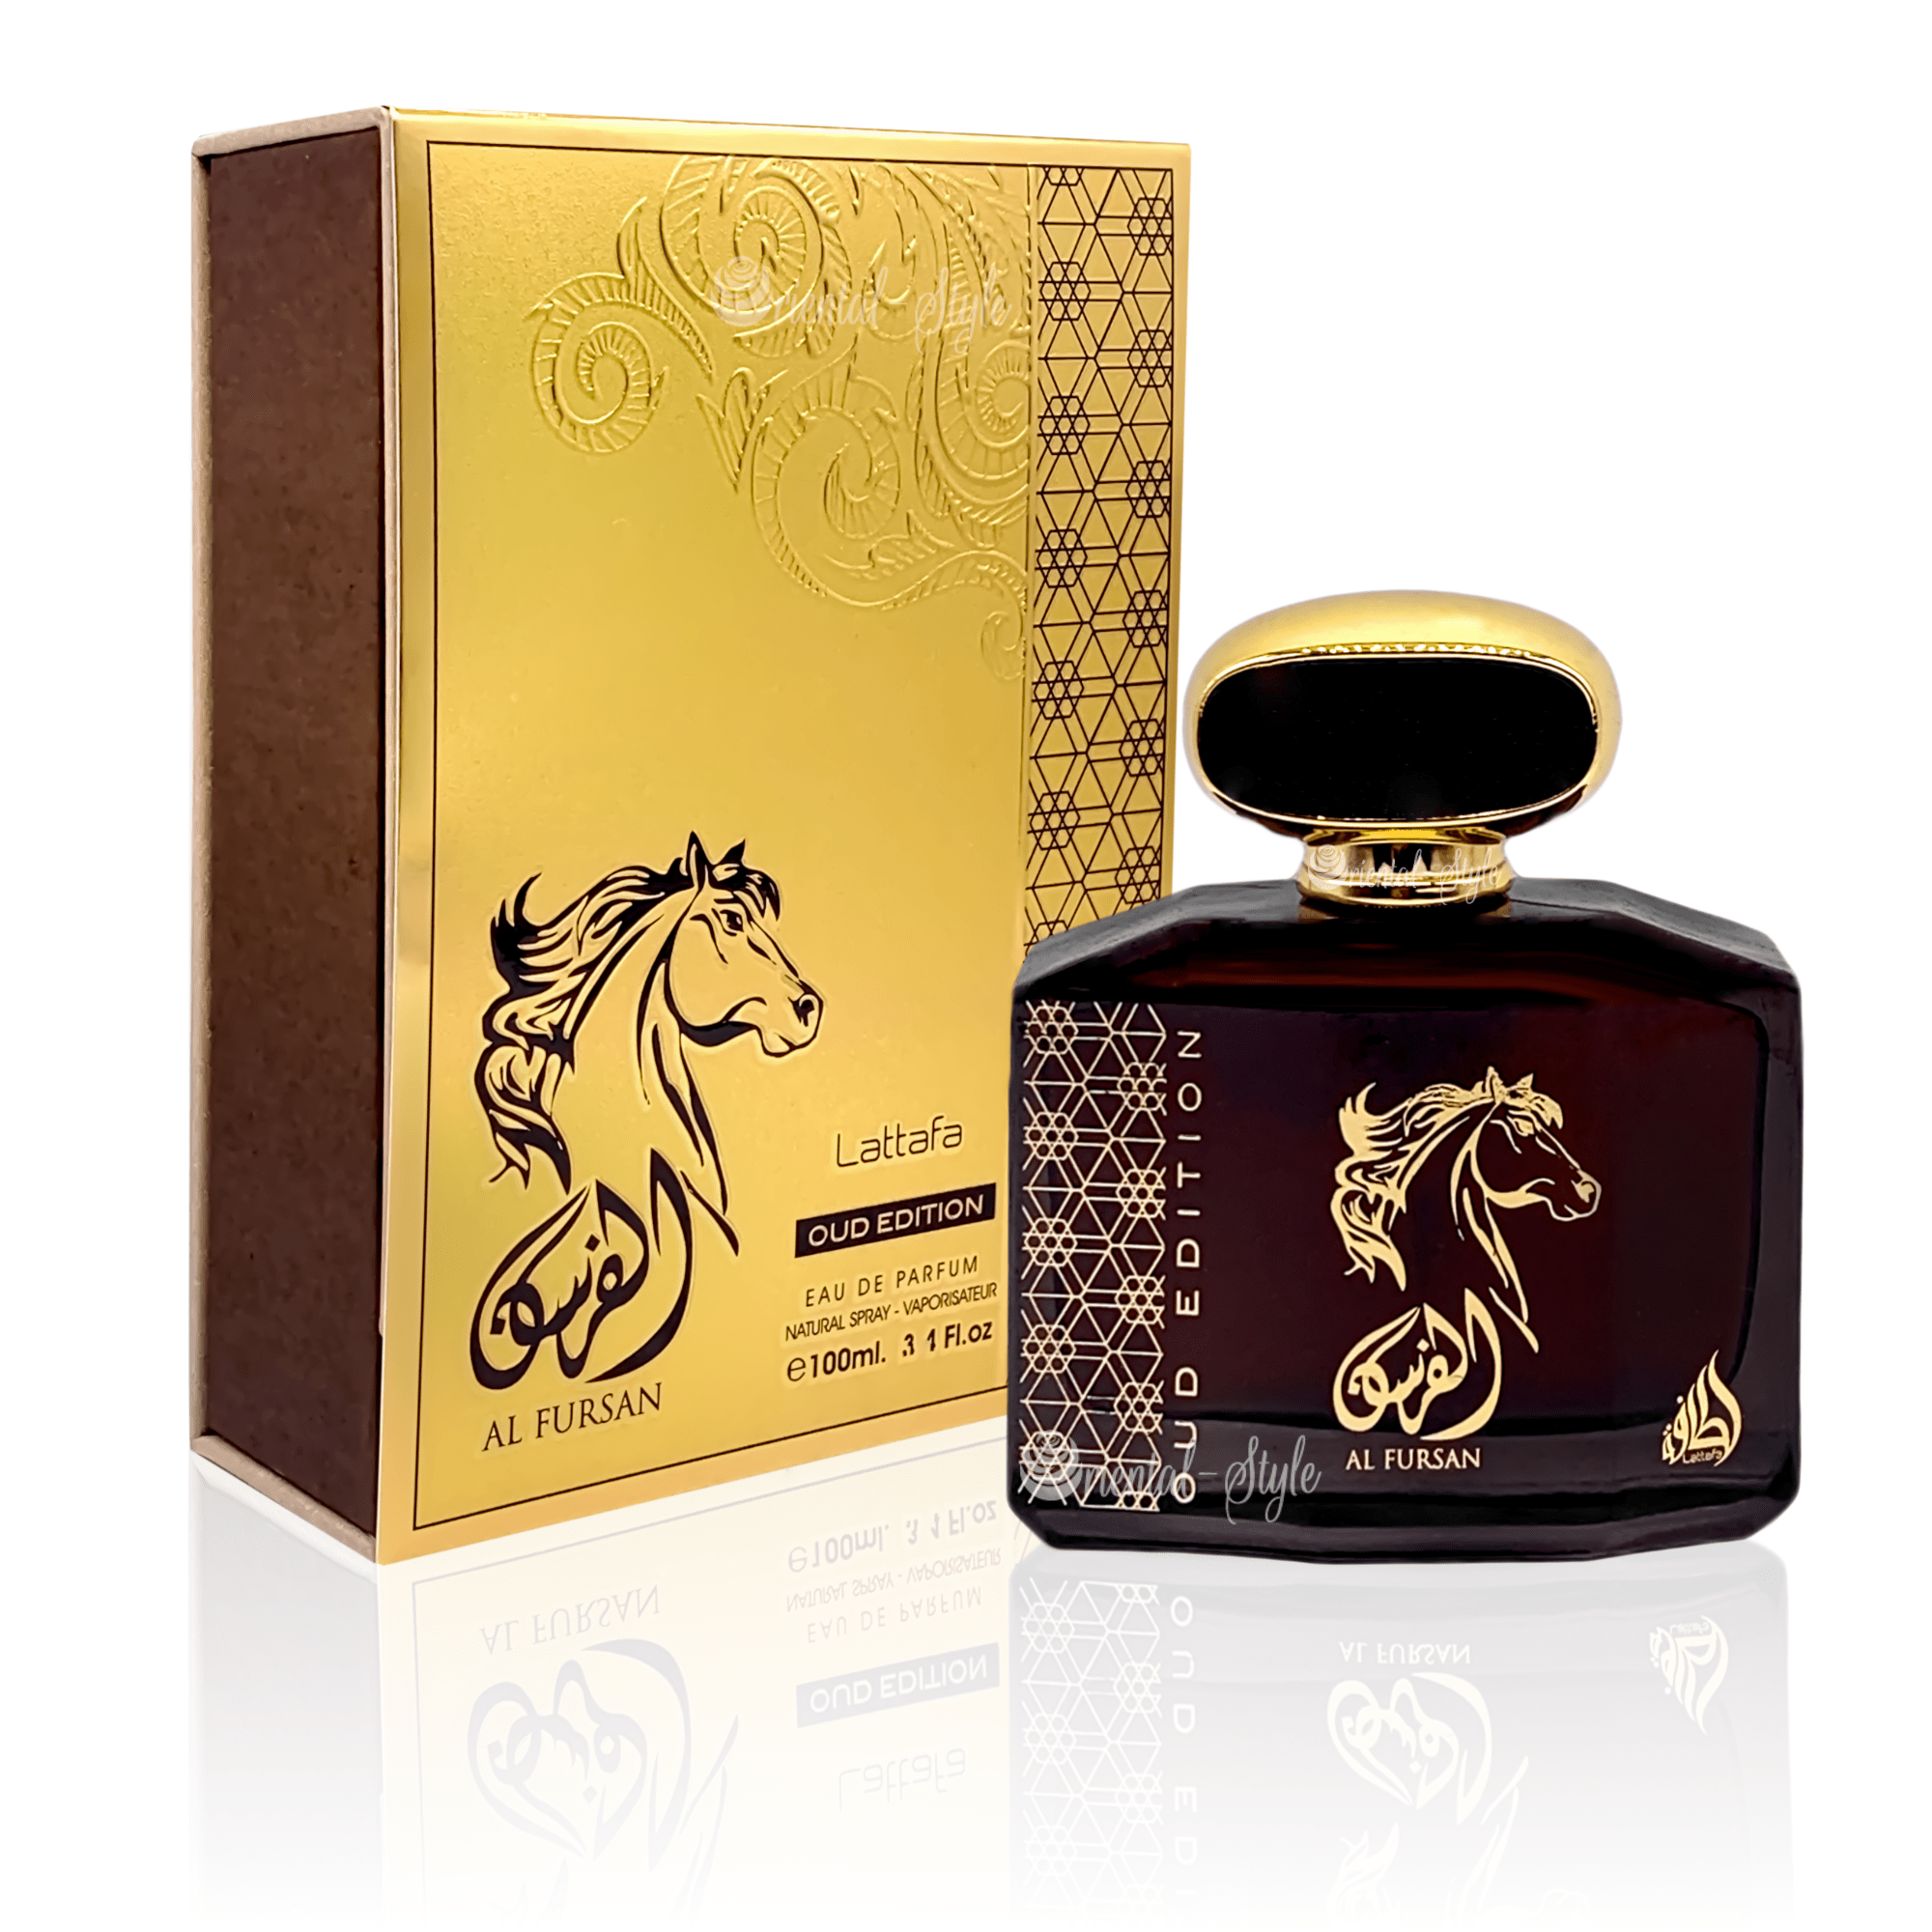 Al Fursan Oud Edition 100Ml Perfume / Eau De Parfum By Lattafa